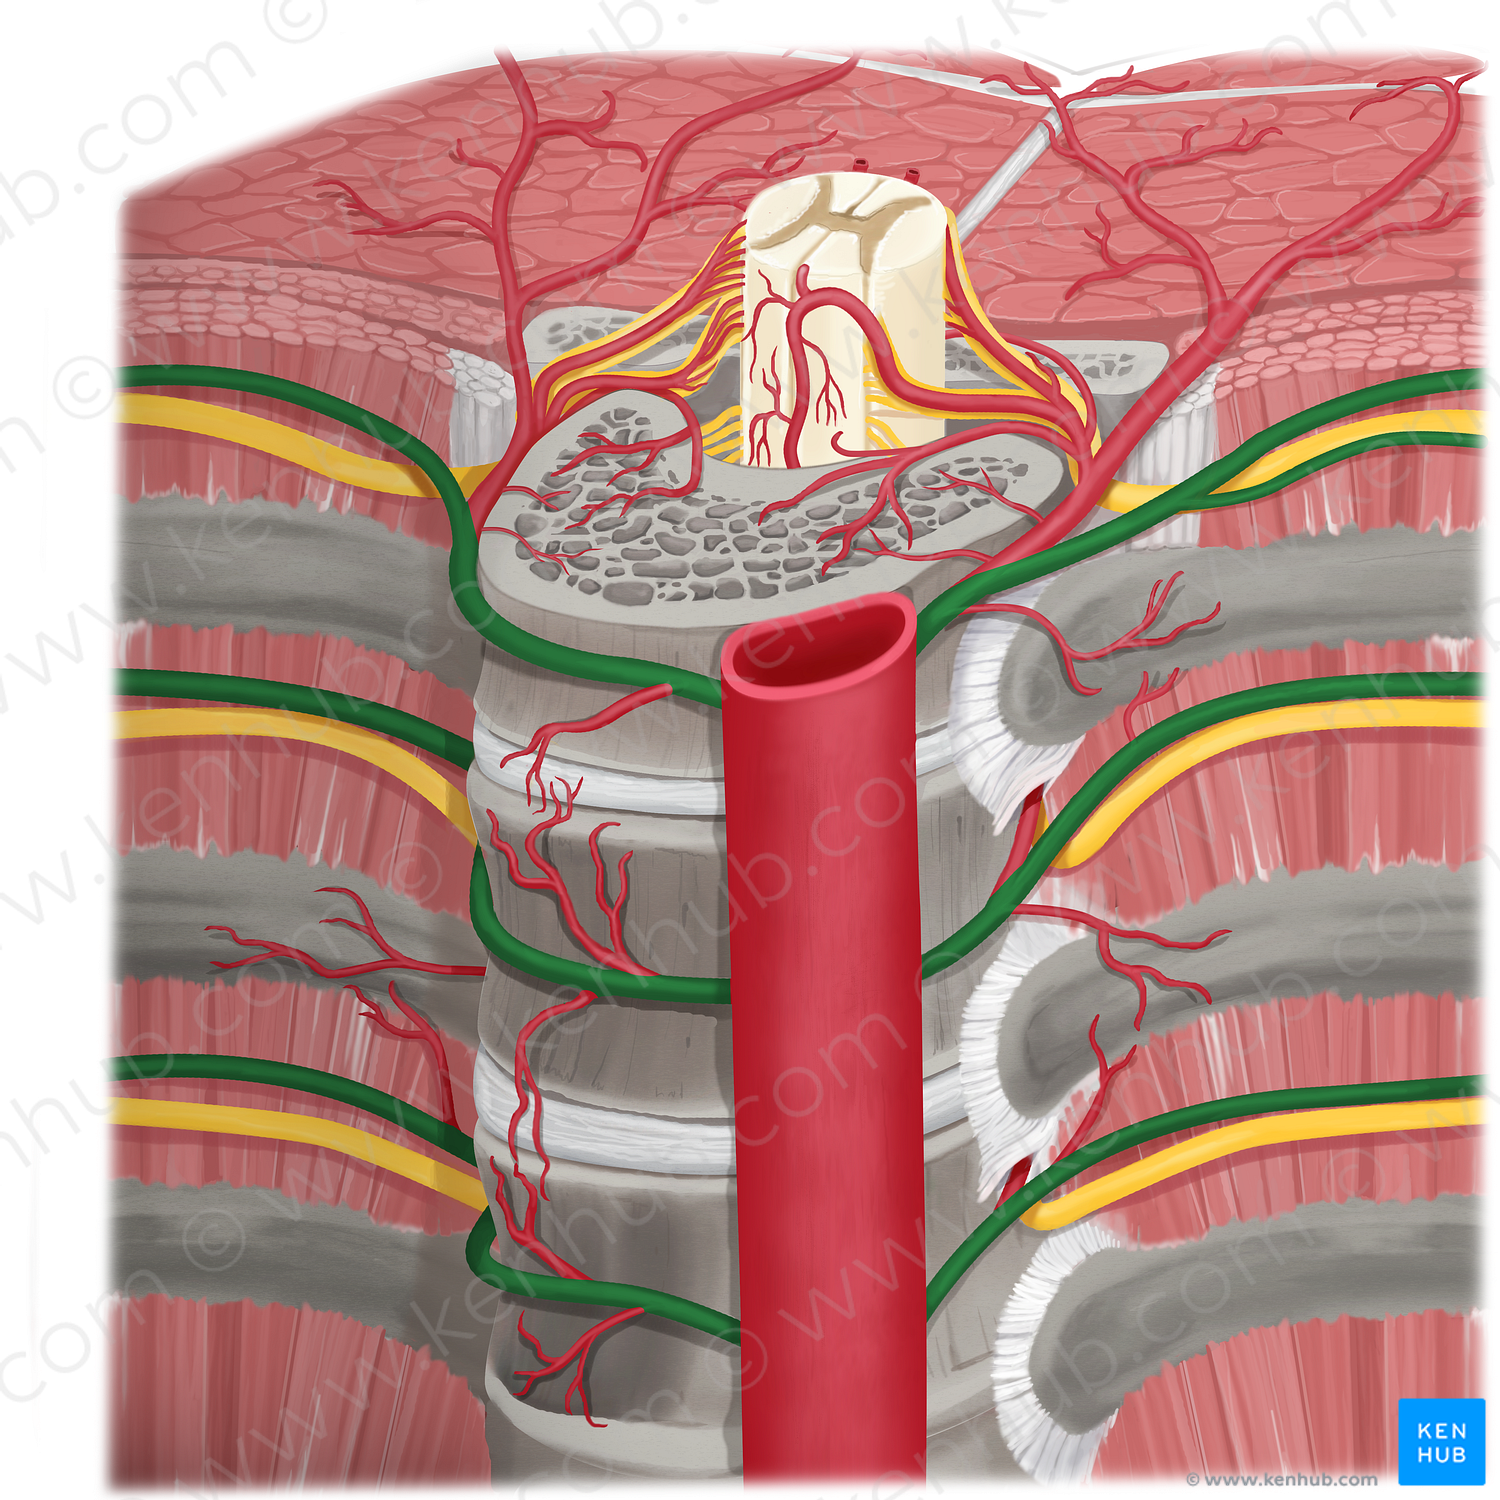 Posterior intercostal artery (#1152)